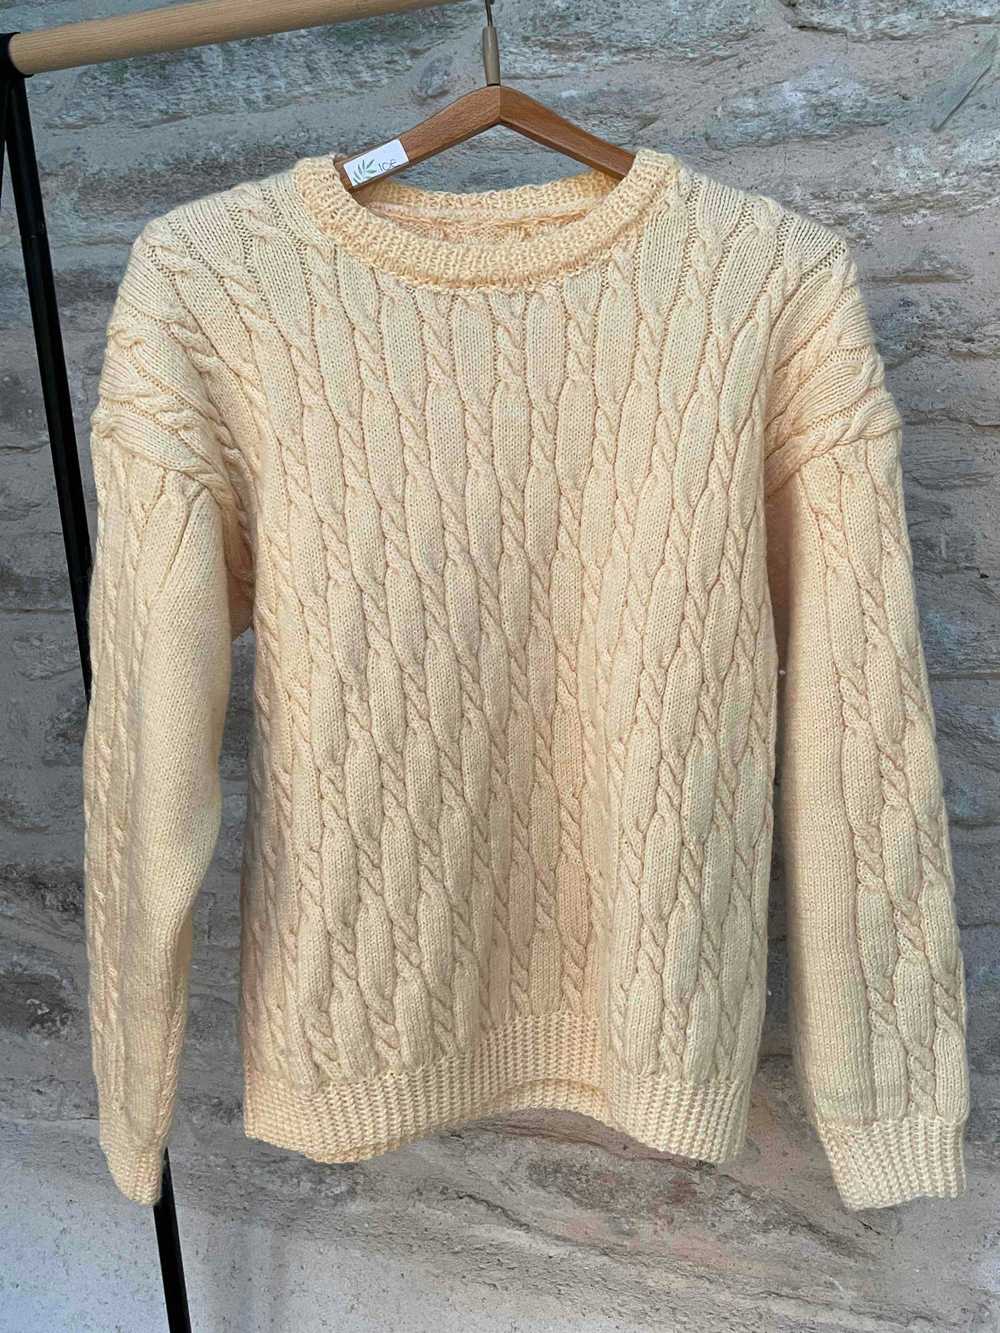 Woolen sweater - Wool sweater, braided, hand knit… - image 2